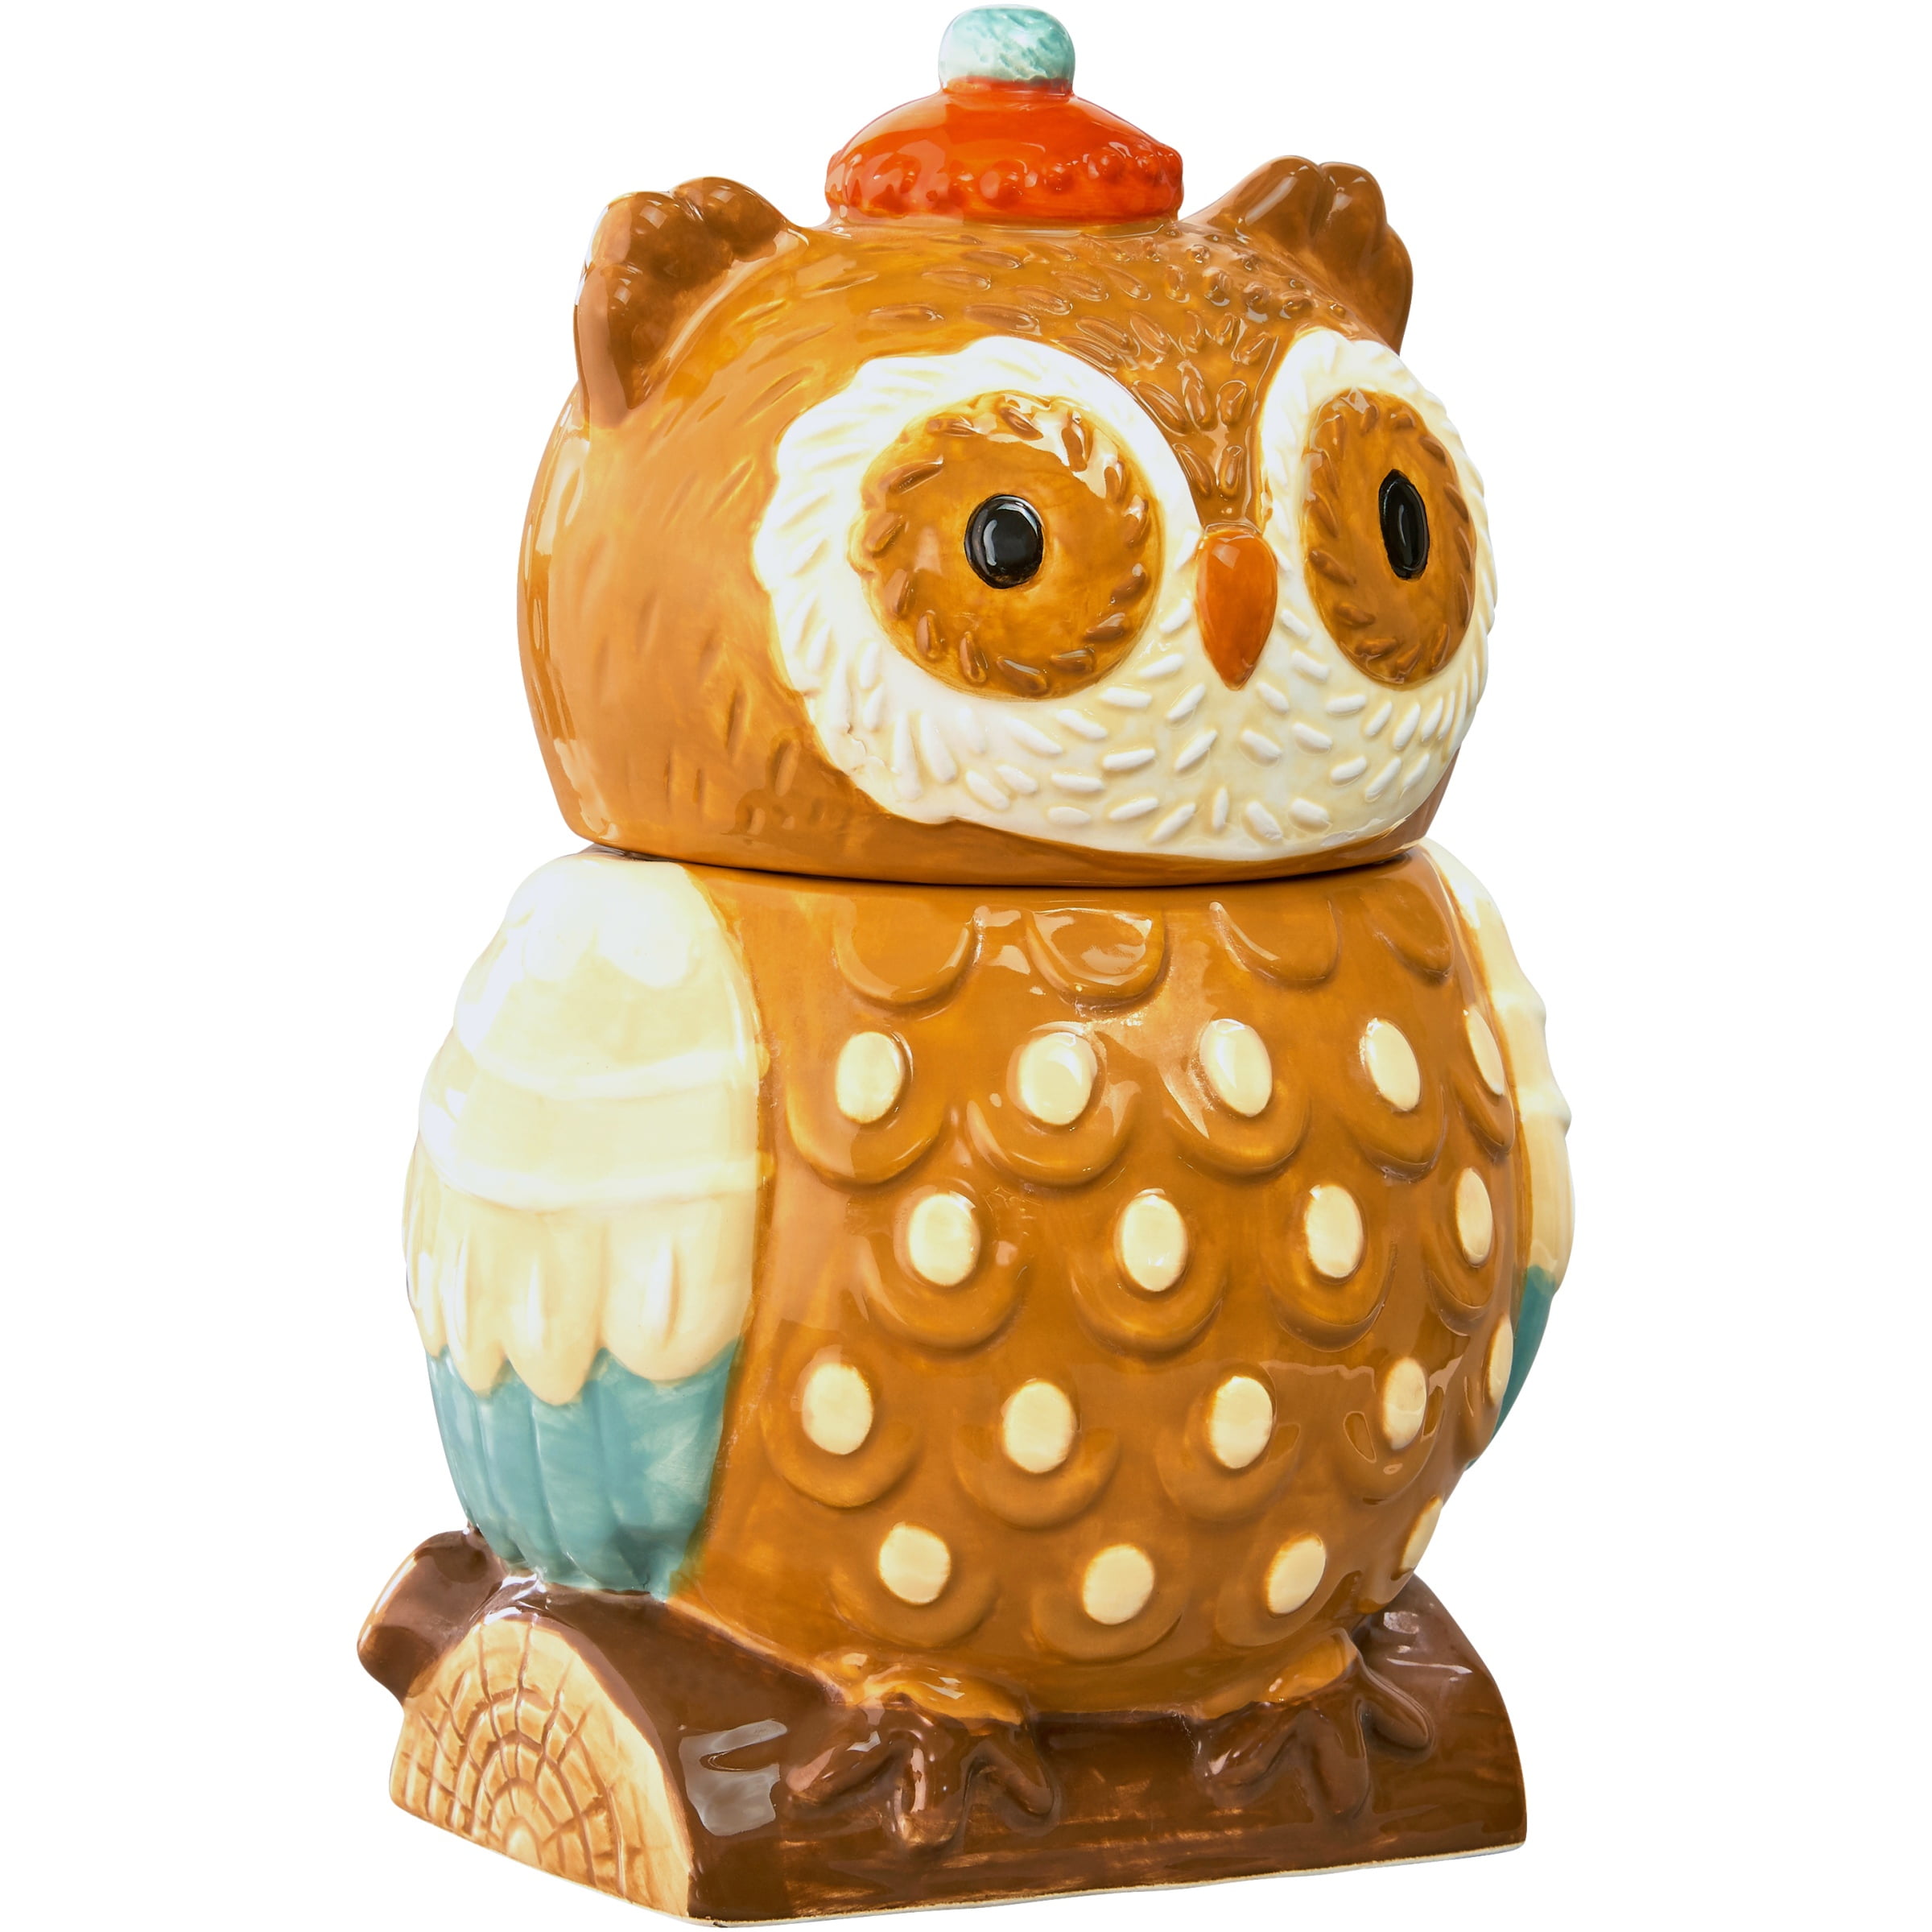 Next Blue Yellow Owl Treat Jar Storage Cookie Biscuit Folkloric Animal 